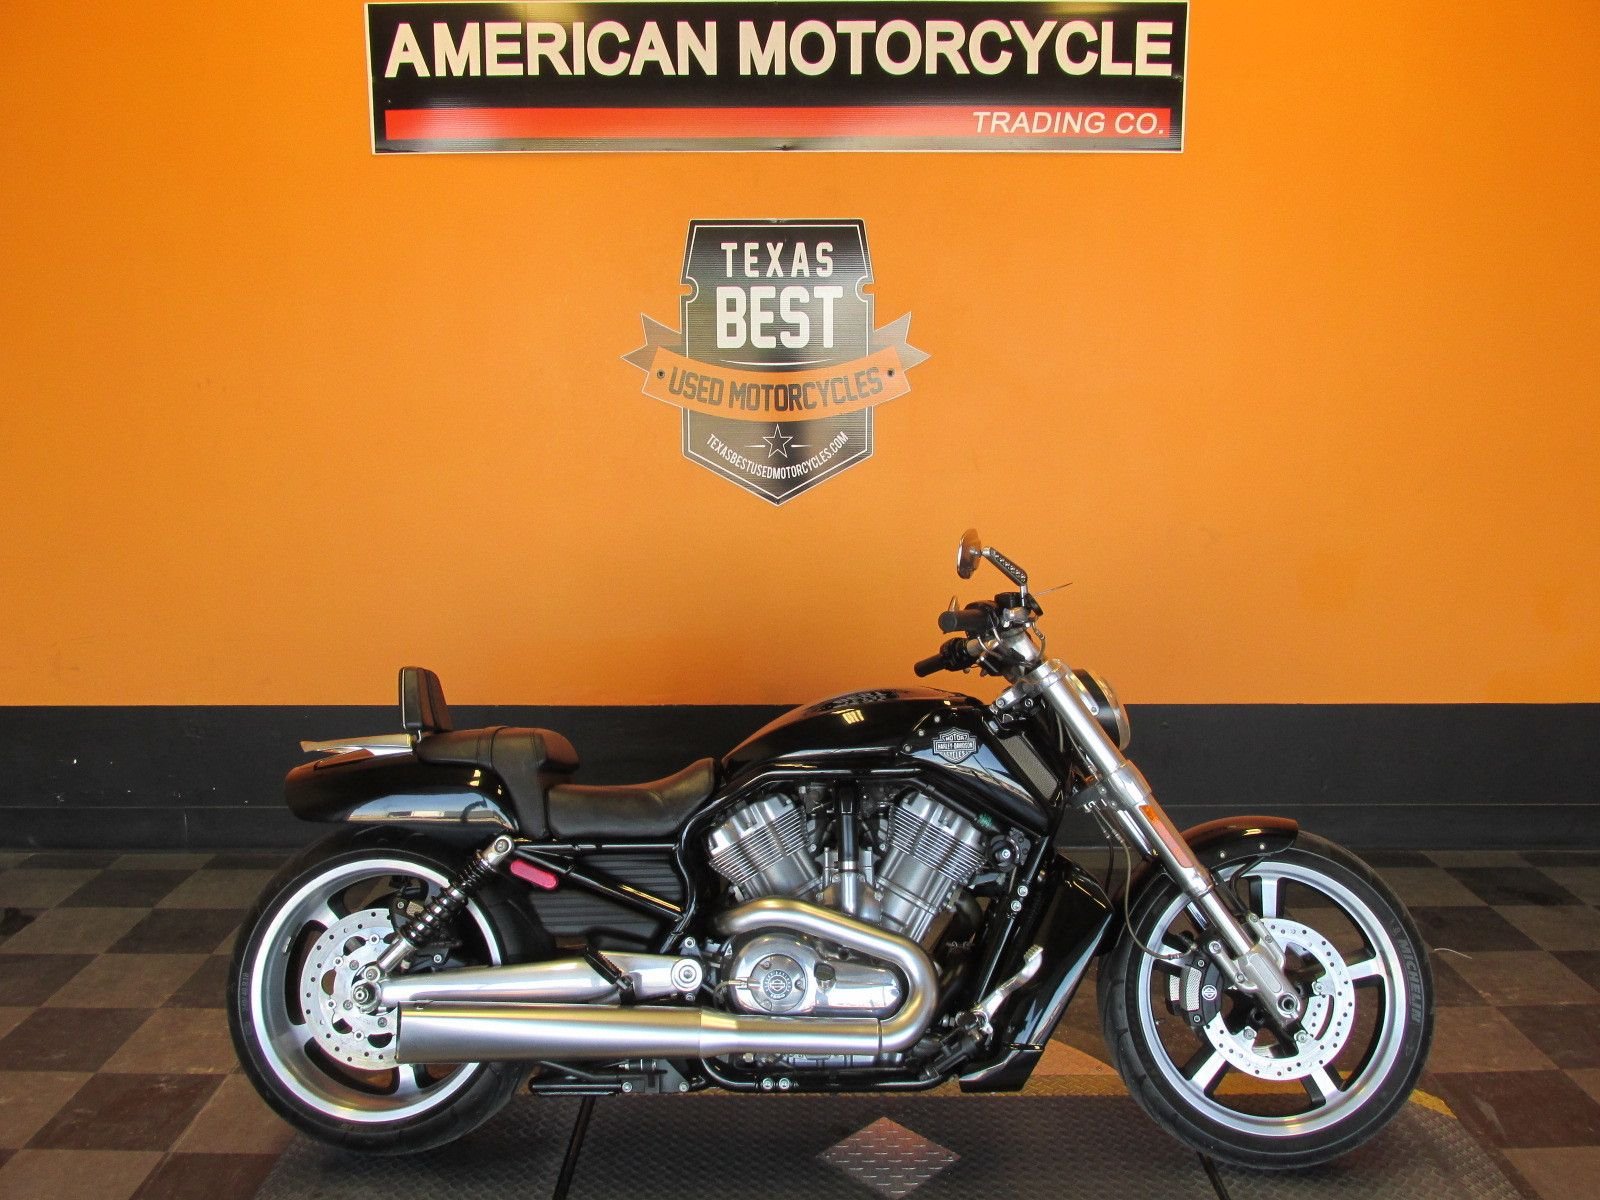 2010 Harley-Davidson V-Rod | American Motorcycle Trading Company - Used Harley  Davidson Motorcycles